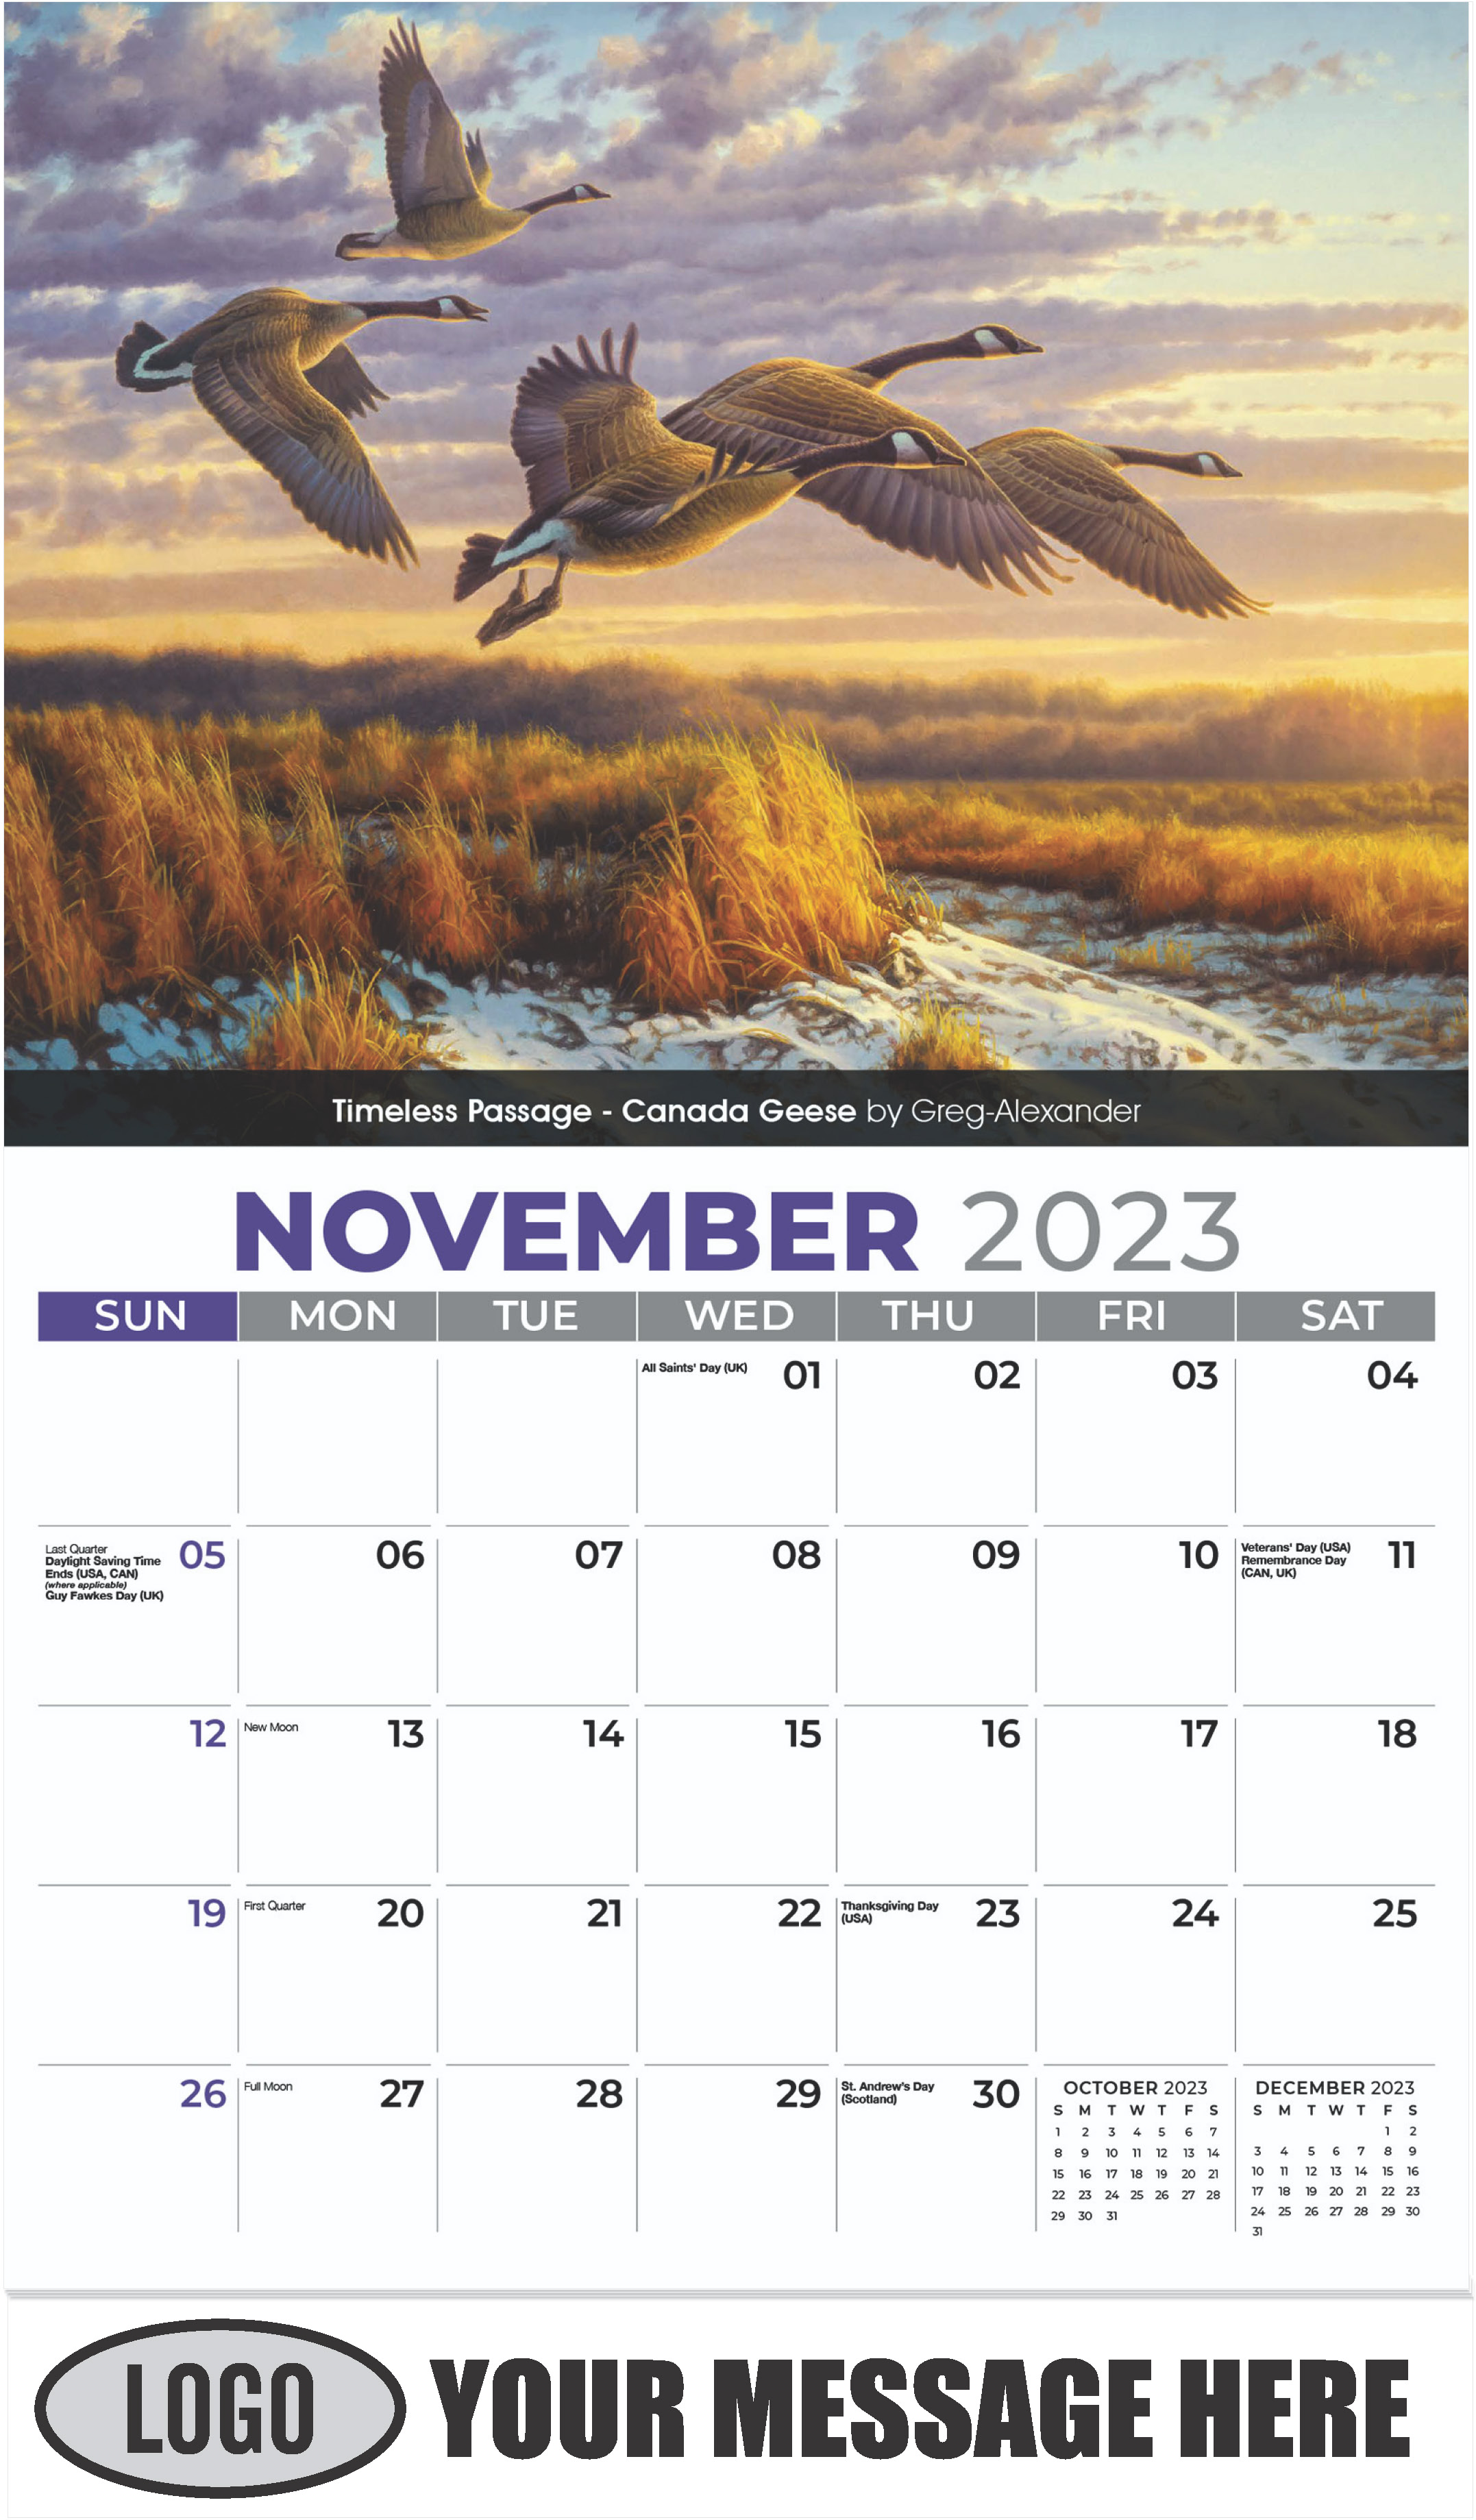 Timeless Passage Canada Geese by Greg-Alexander - November - Wildlife Portraits 2023 Promotional Calendar